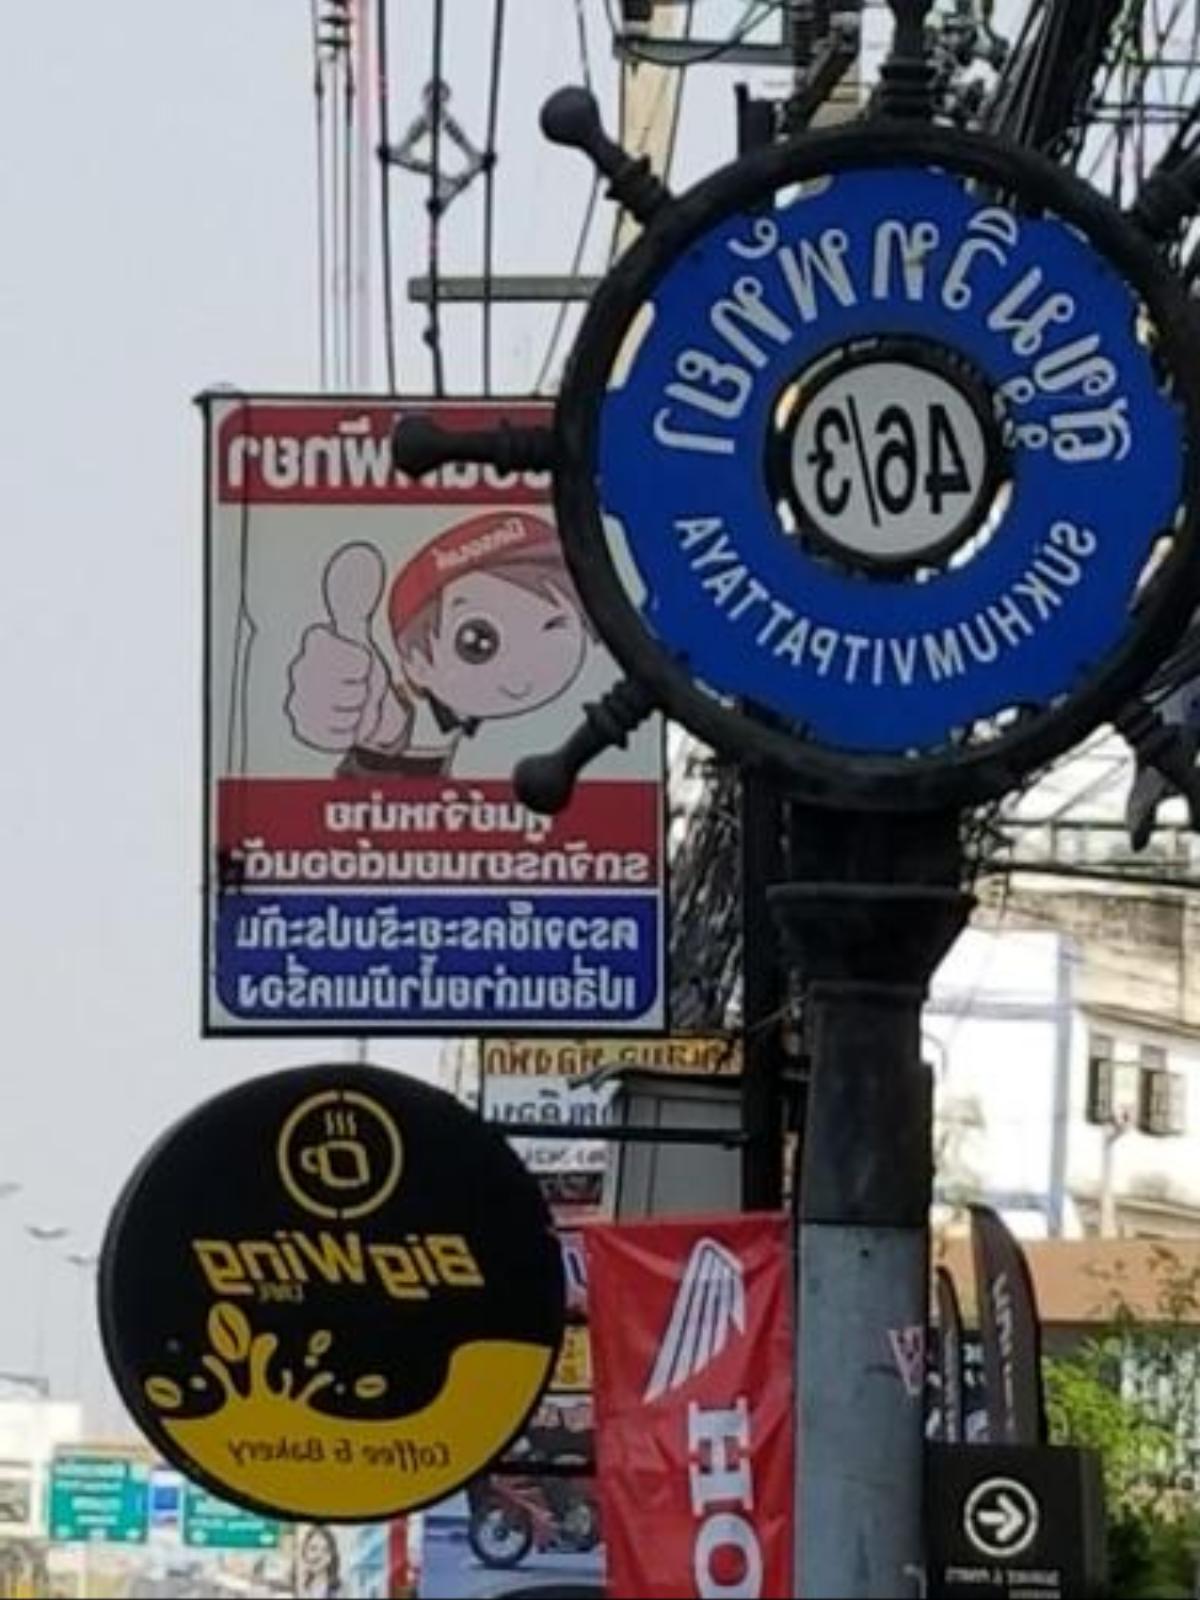 Pattayatravel Hotel Chon Buri Thailand